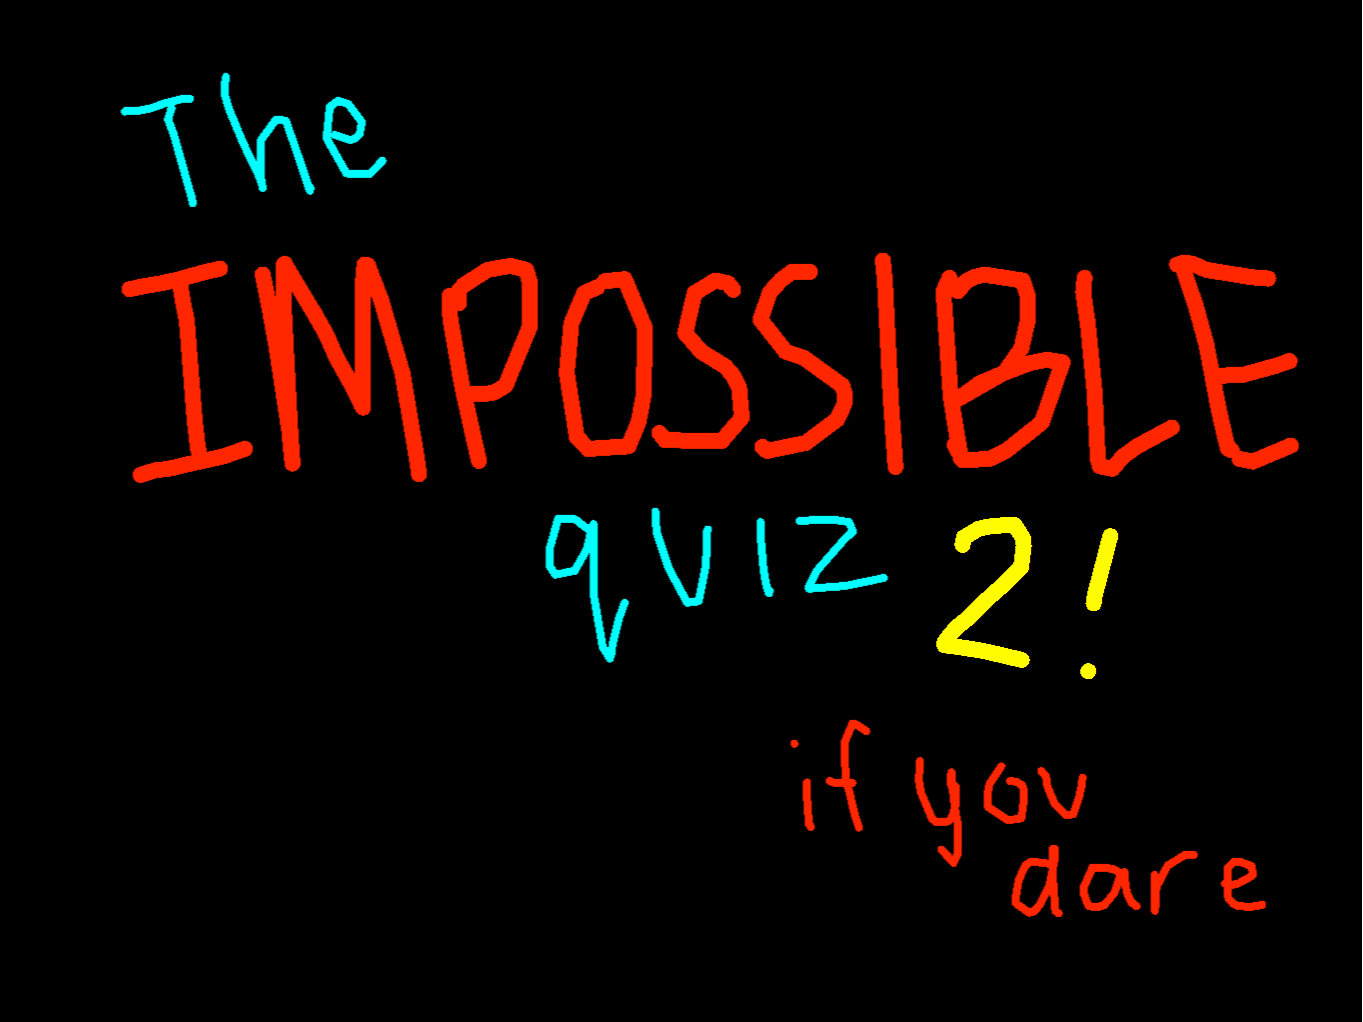 The hardest quiz 2